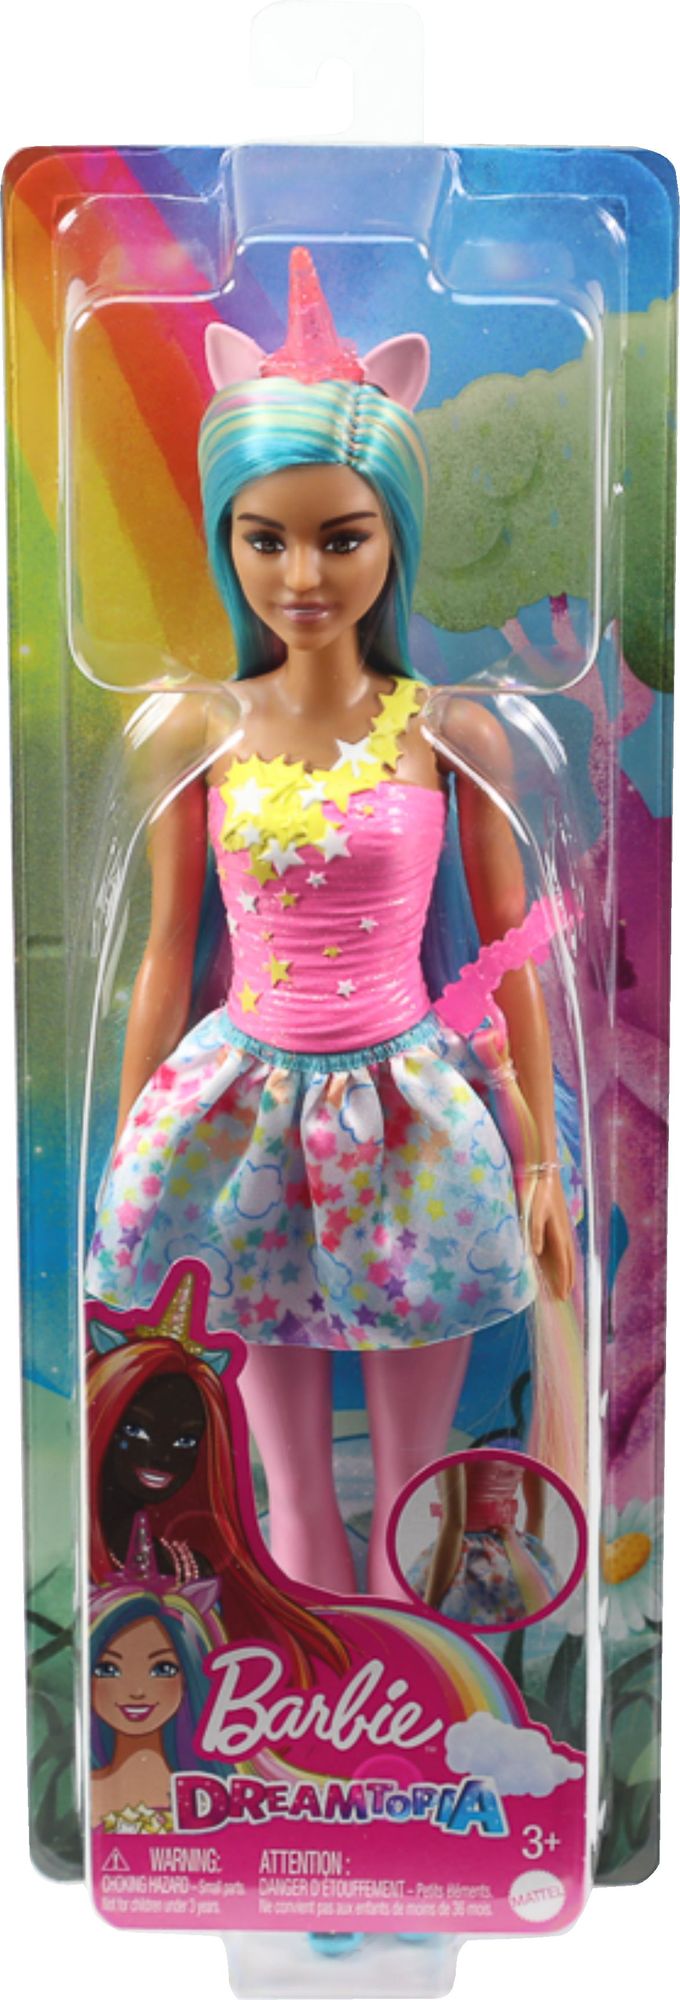 Barbie - Barbie Dreamtopia Einhorn-Puppe im Regenbogen-Look' kaufen -  Spielwaren